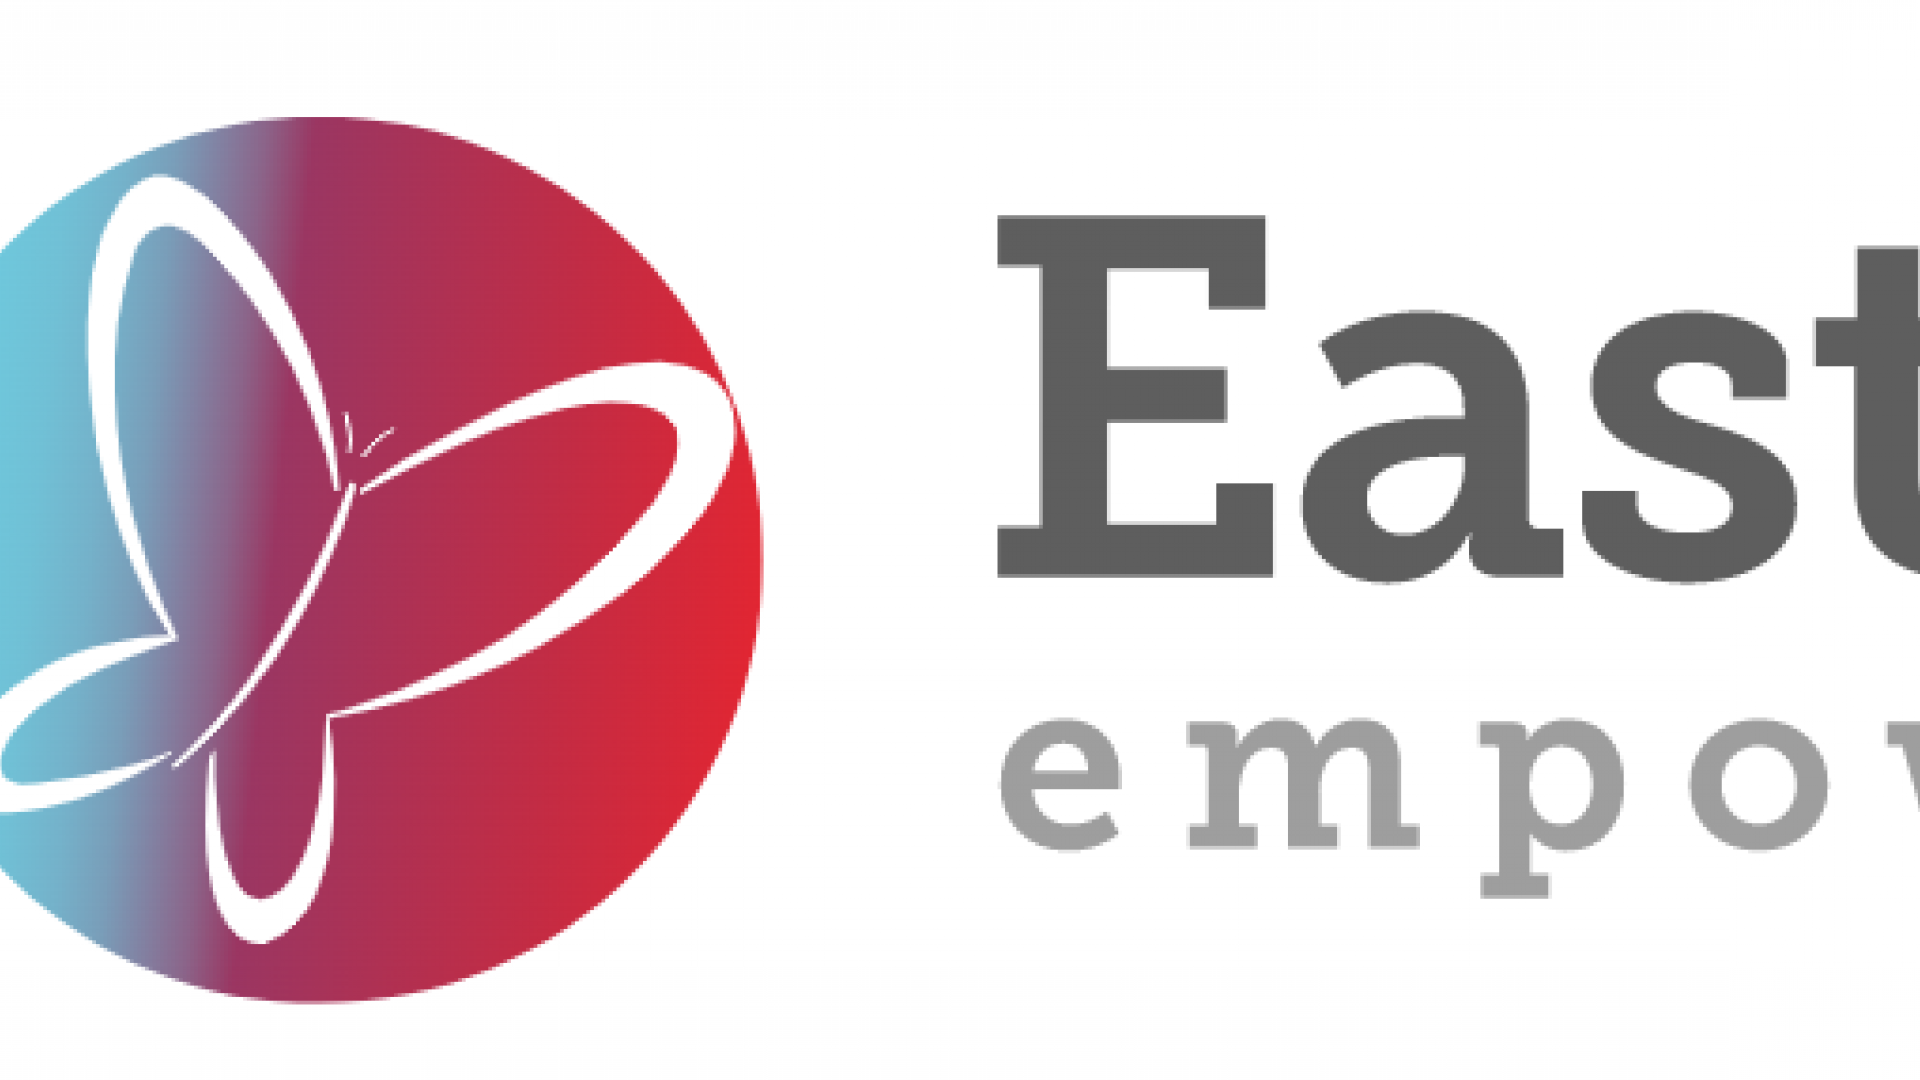 Eastern Enterprise Logo